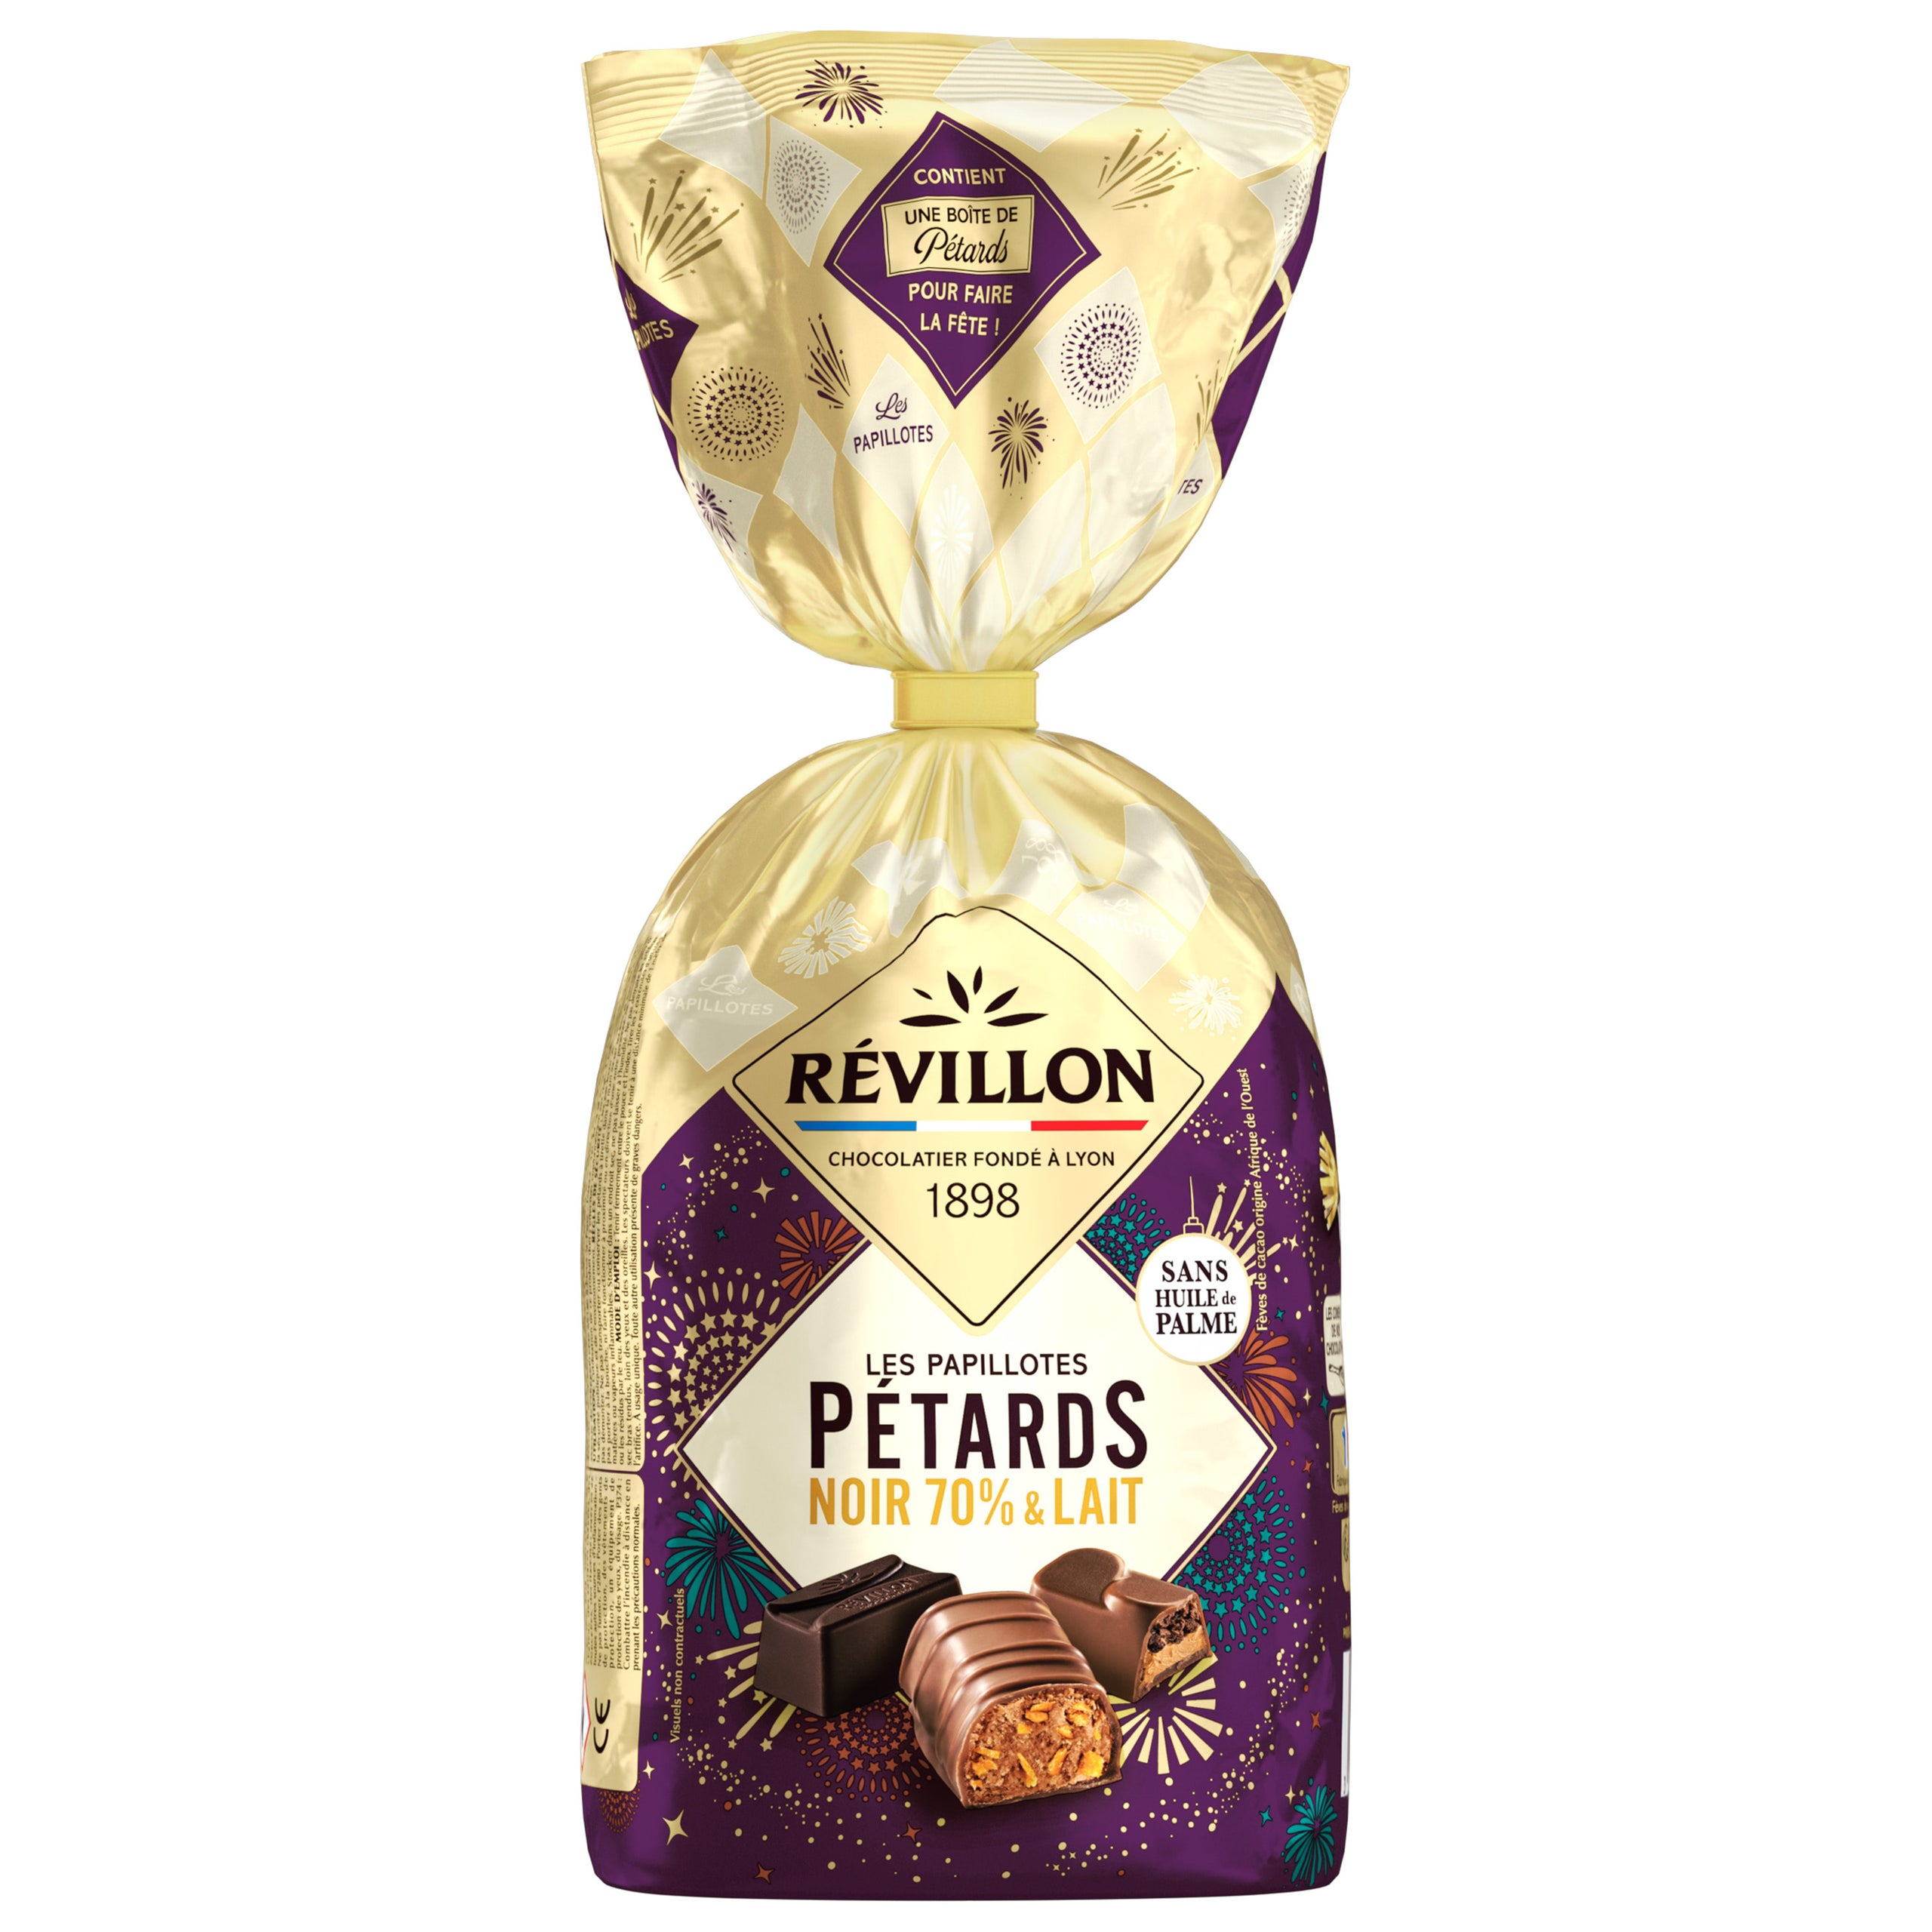 🇫🇷 Papillotes Pétards 70% Dark & Milk by Révillon Chocolatier, 13 oz  (370g)